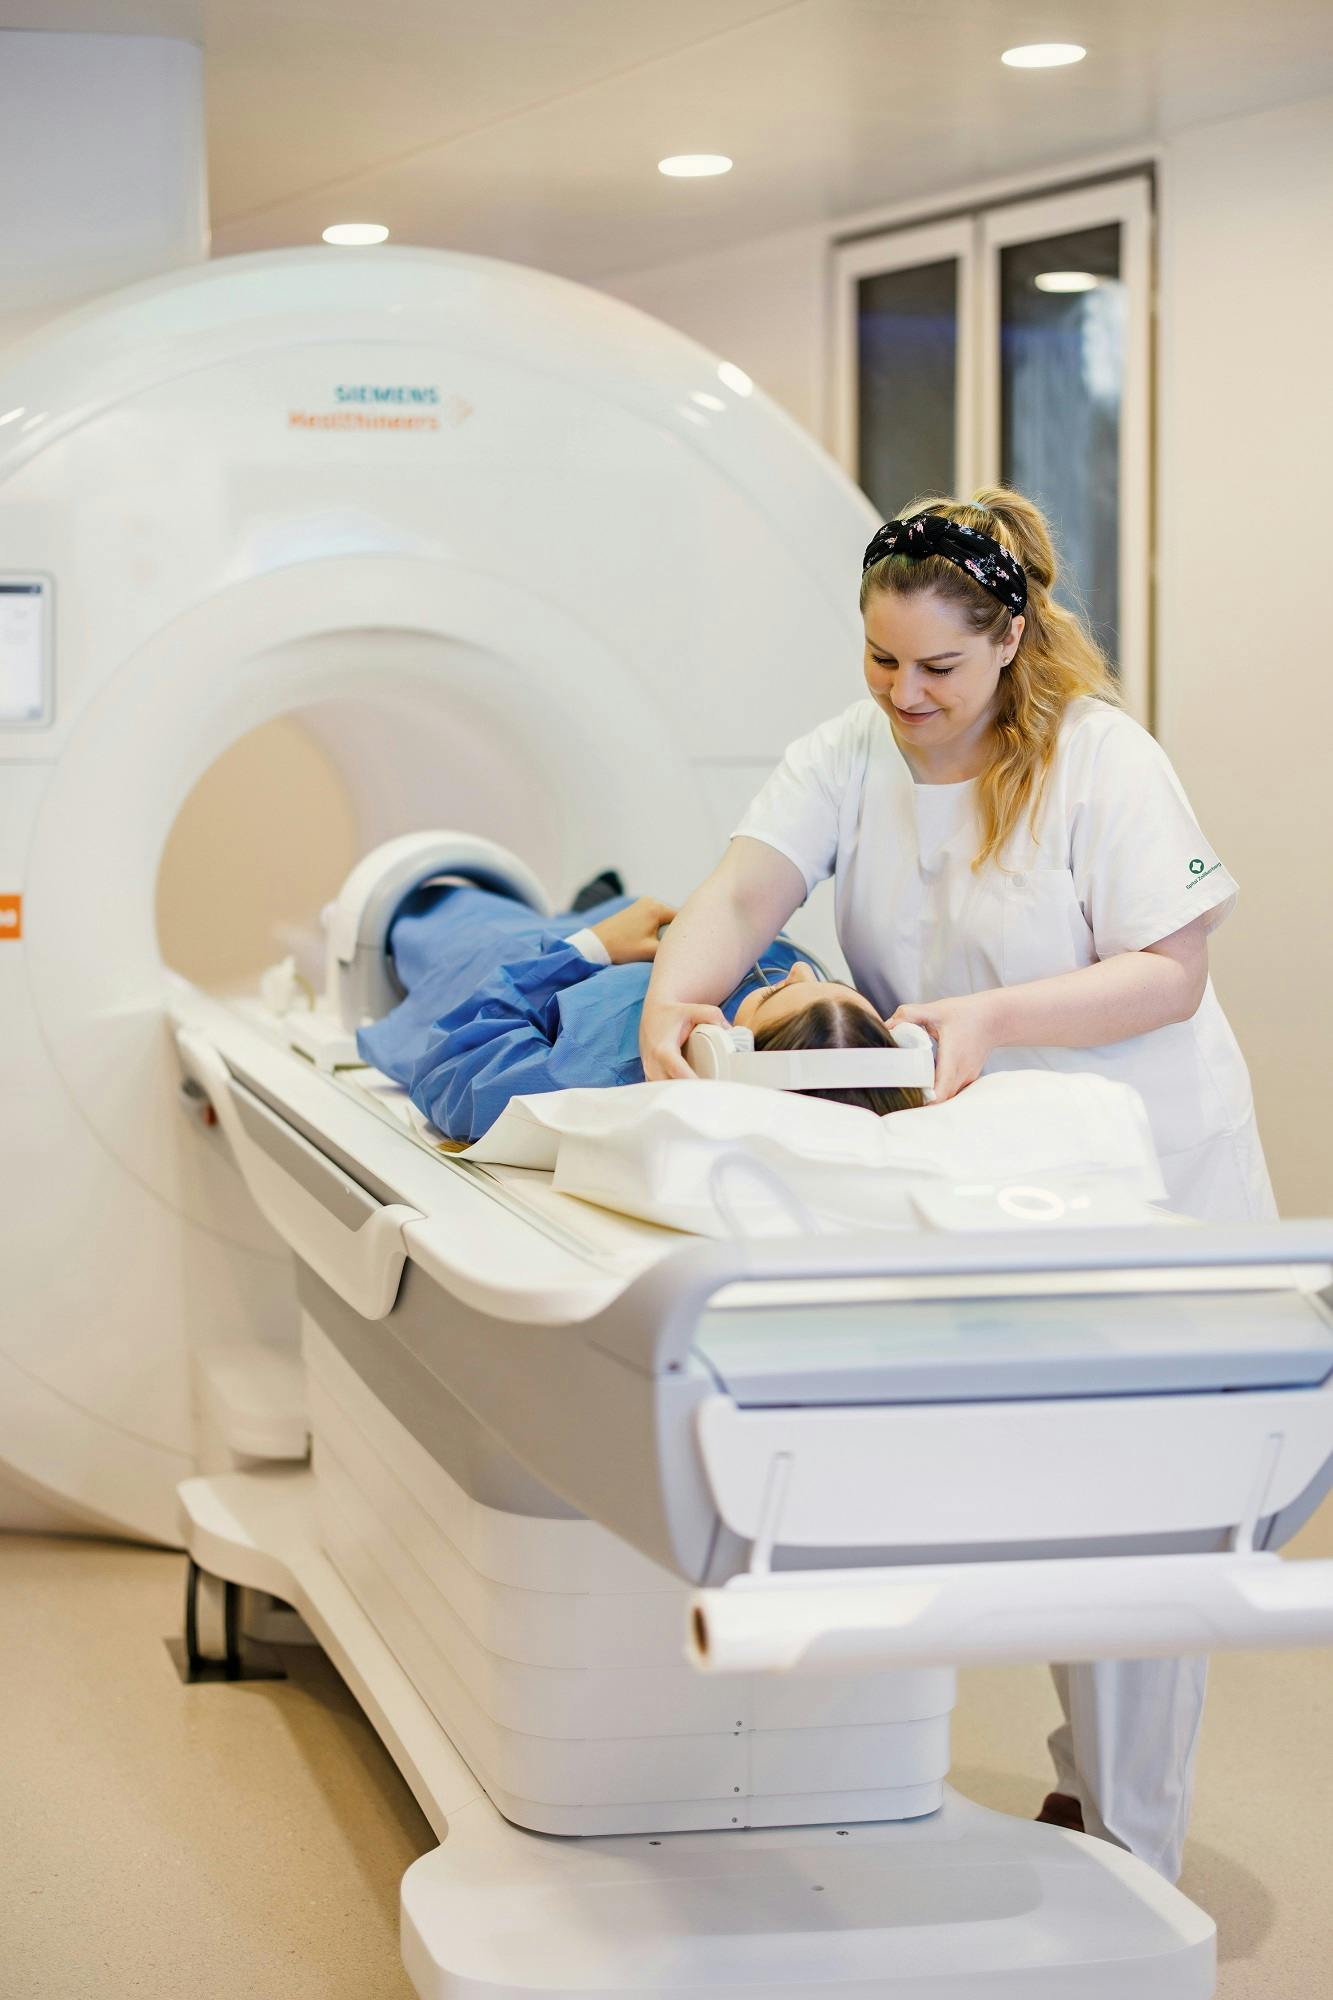 Medical specialist prepares patient for MRI examination.